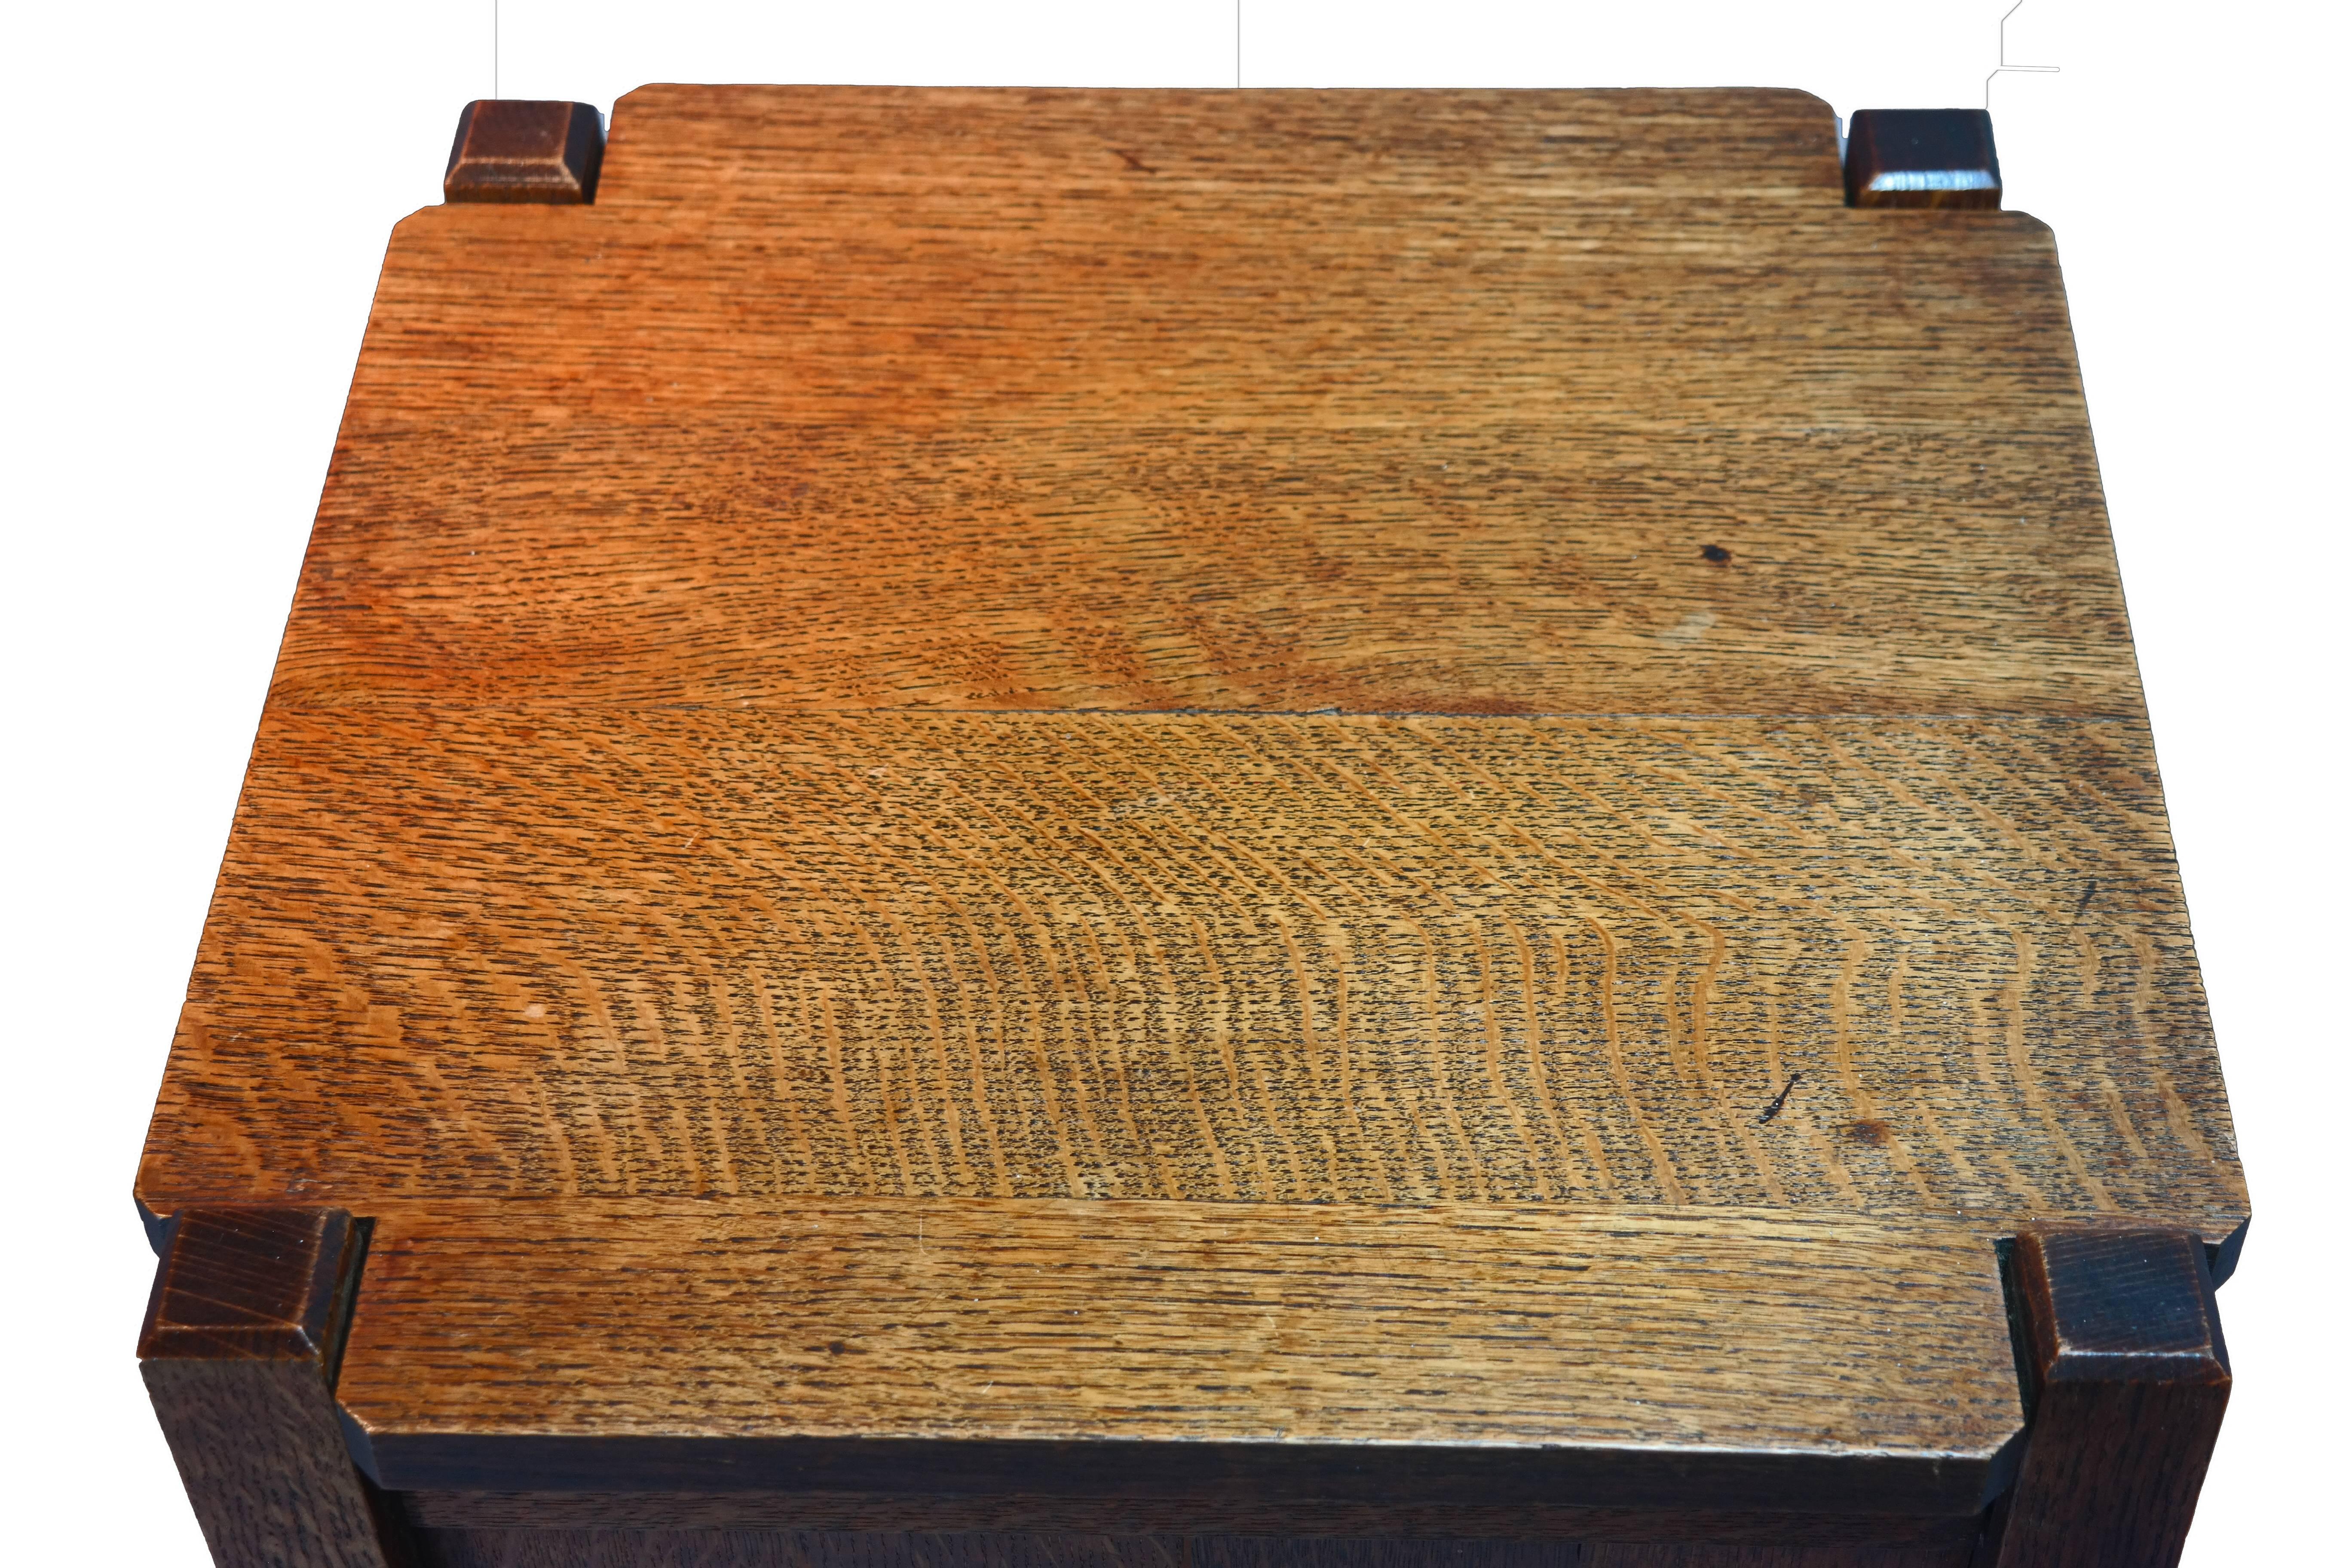 Scottish Arts & Crafts Mission-style tigered oak side table.